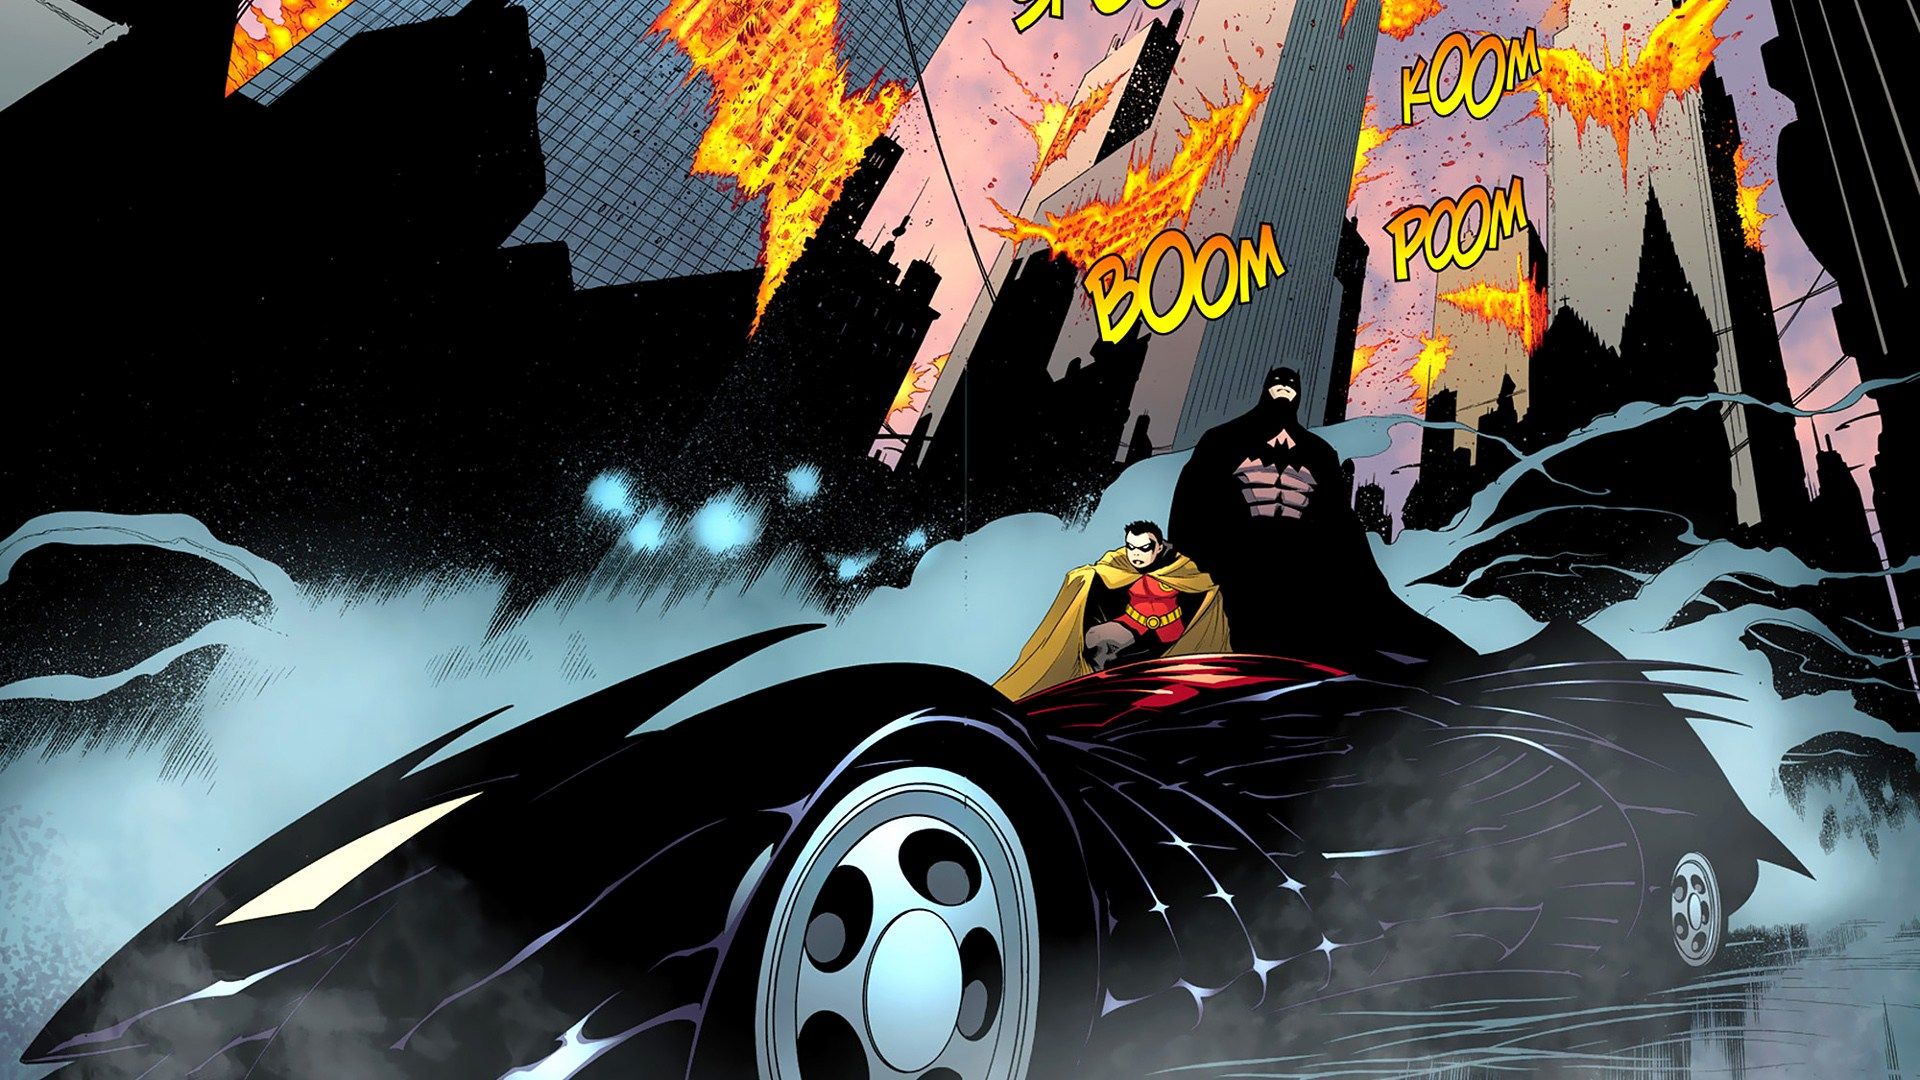 Batman and Robin in the batmobile